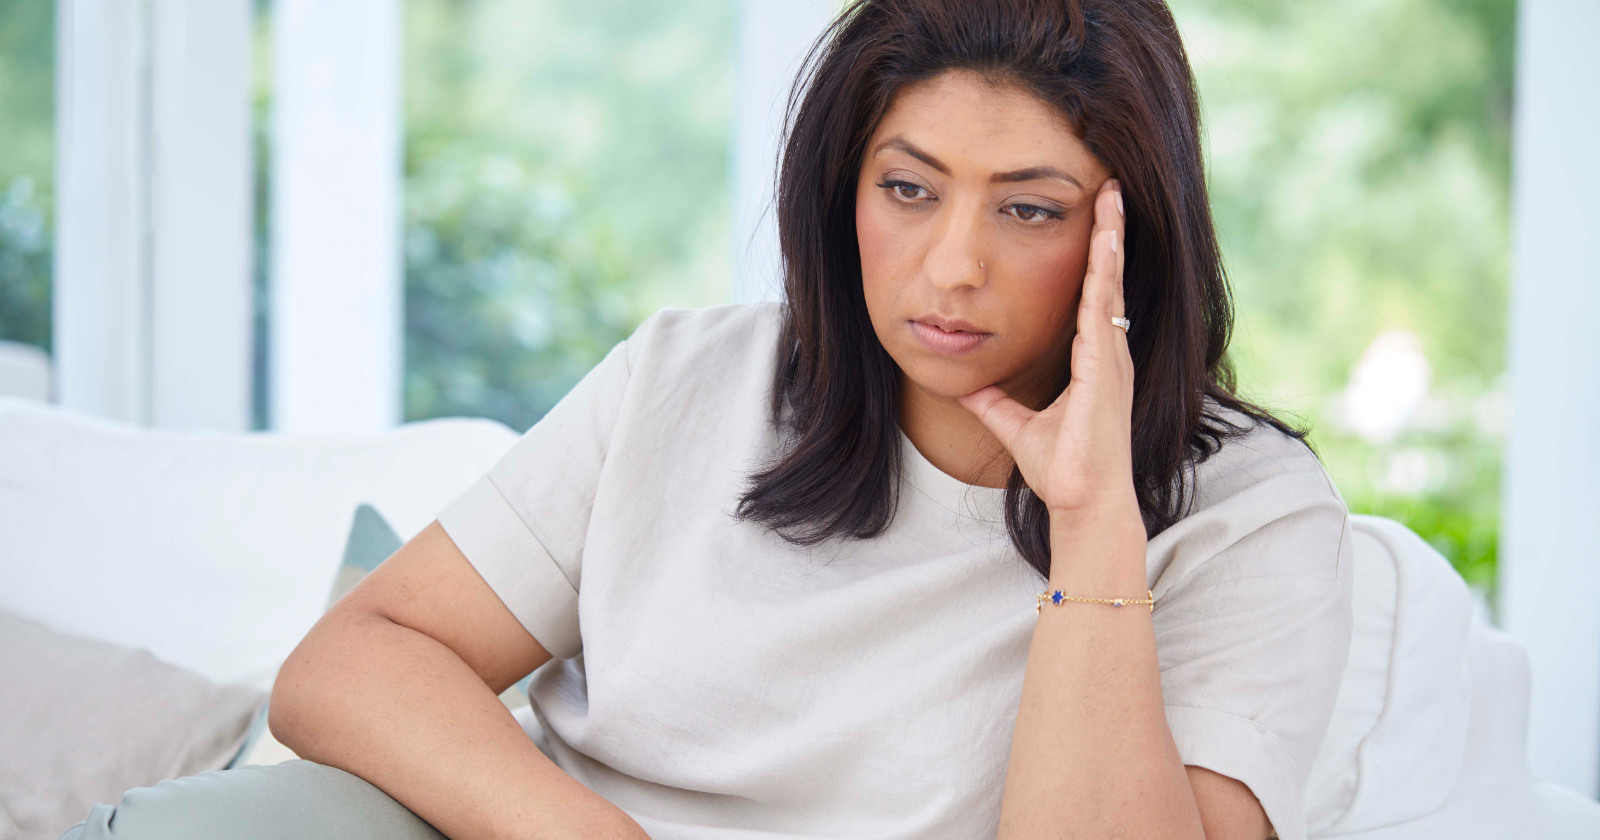 Psychological symptoms of menopause